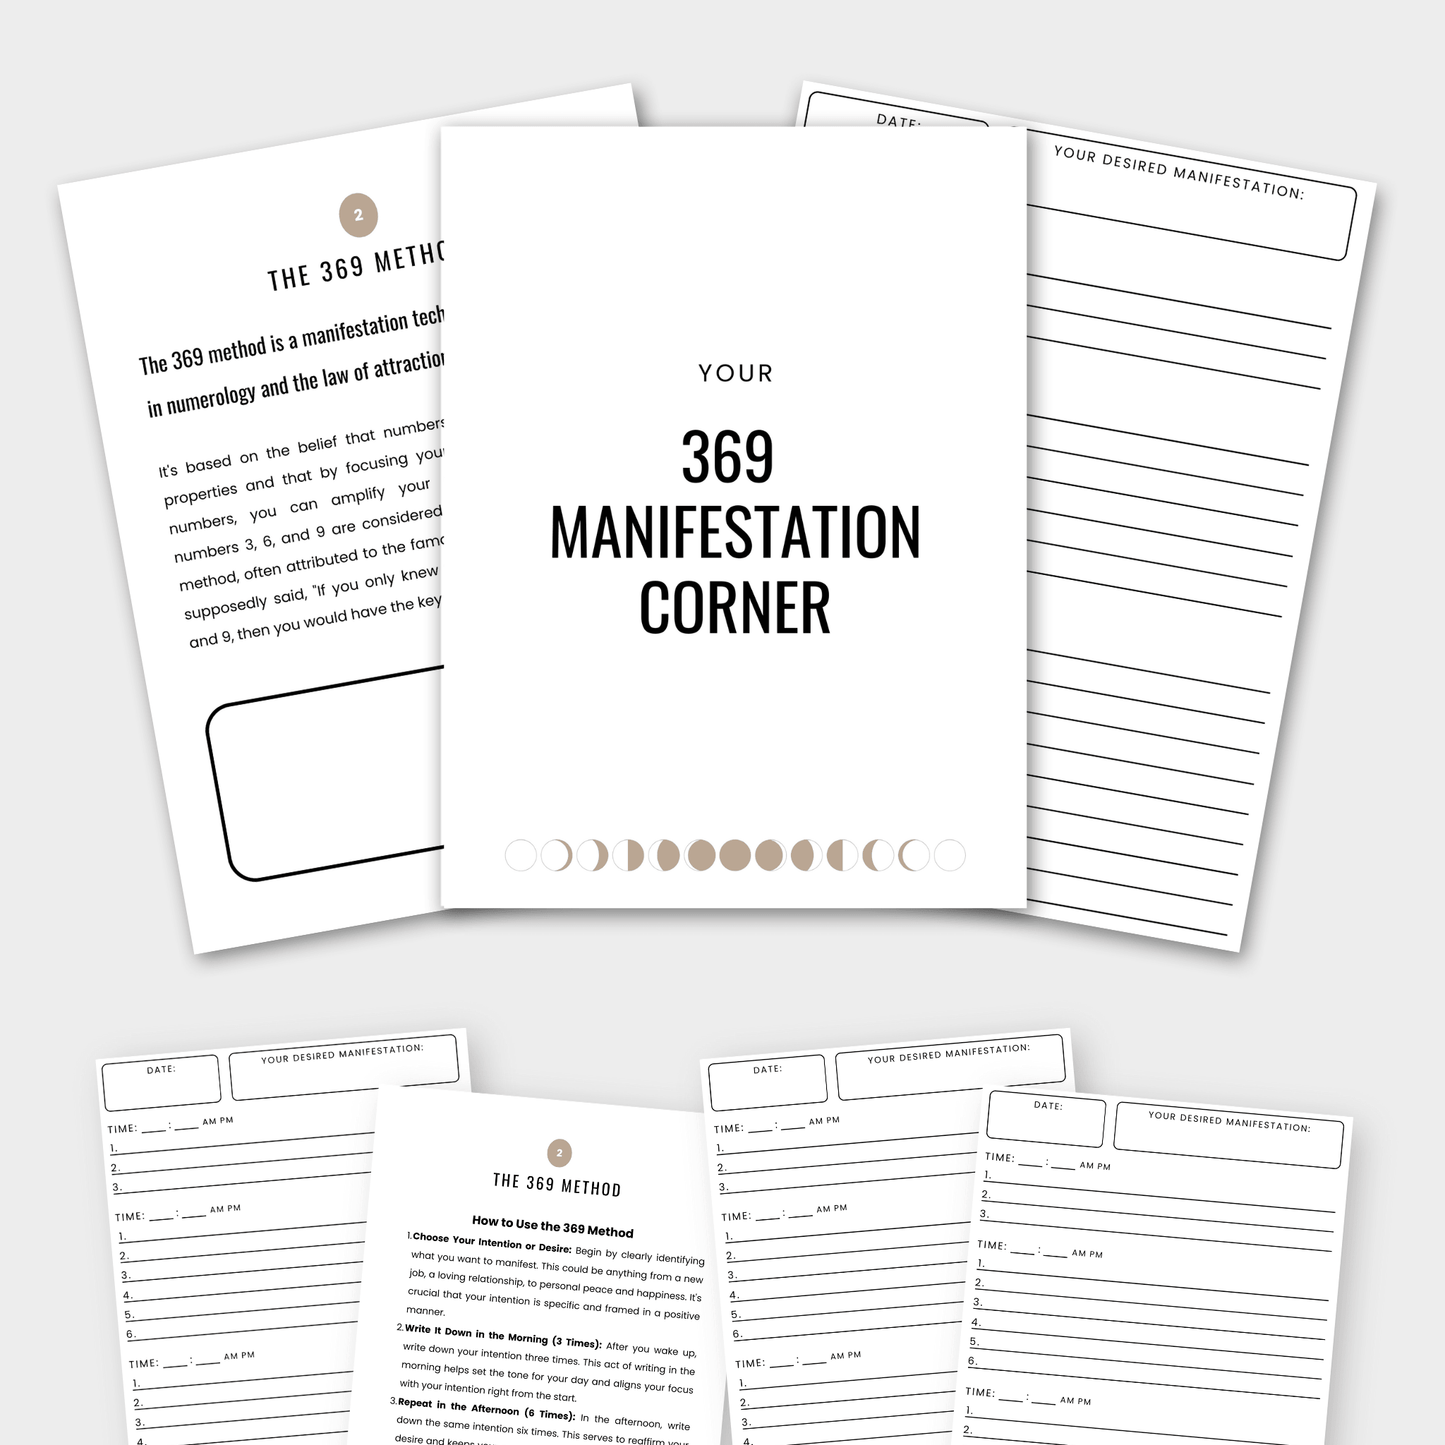 Magic Manifestation Journal